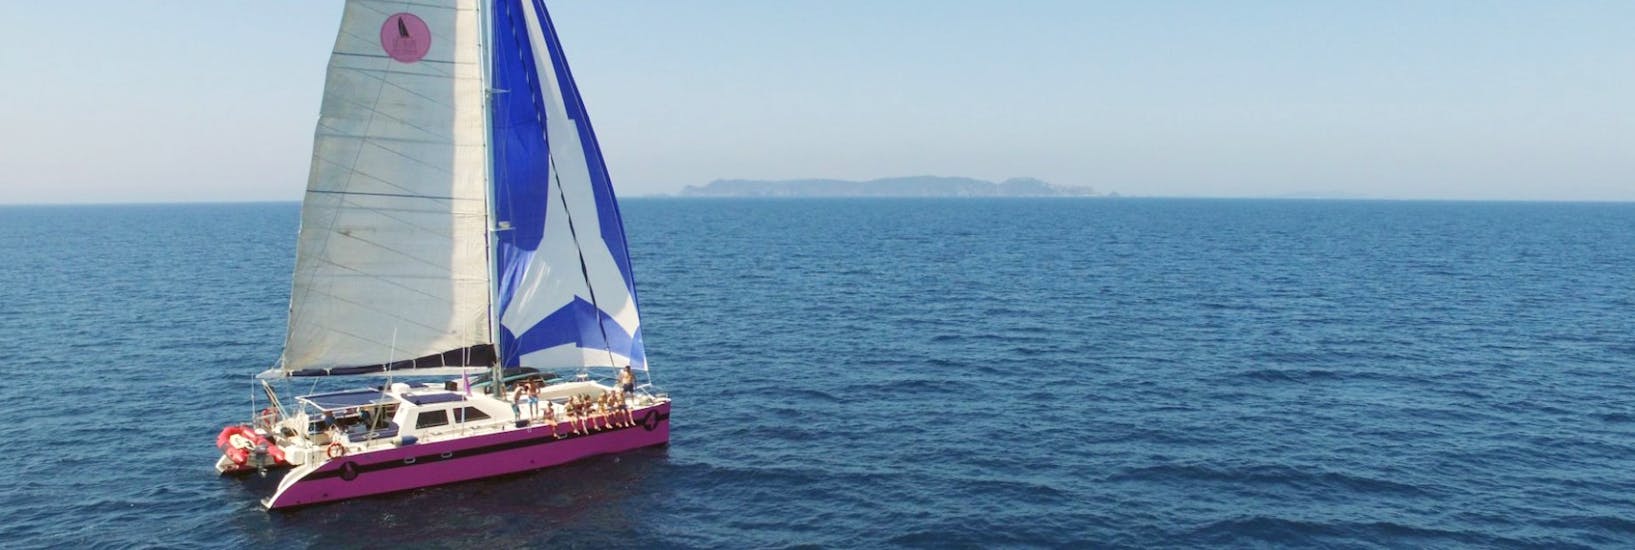 View during the Catamaran Trip in the Gulf of Saint-Tropez from Sainte-Maxime with Caseneuve Maxi Catamaran.